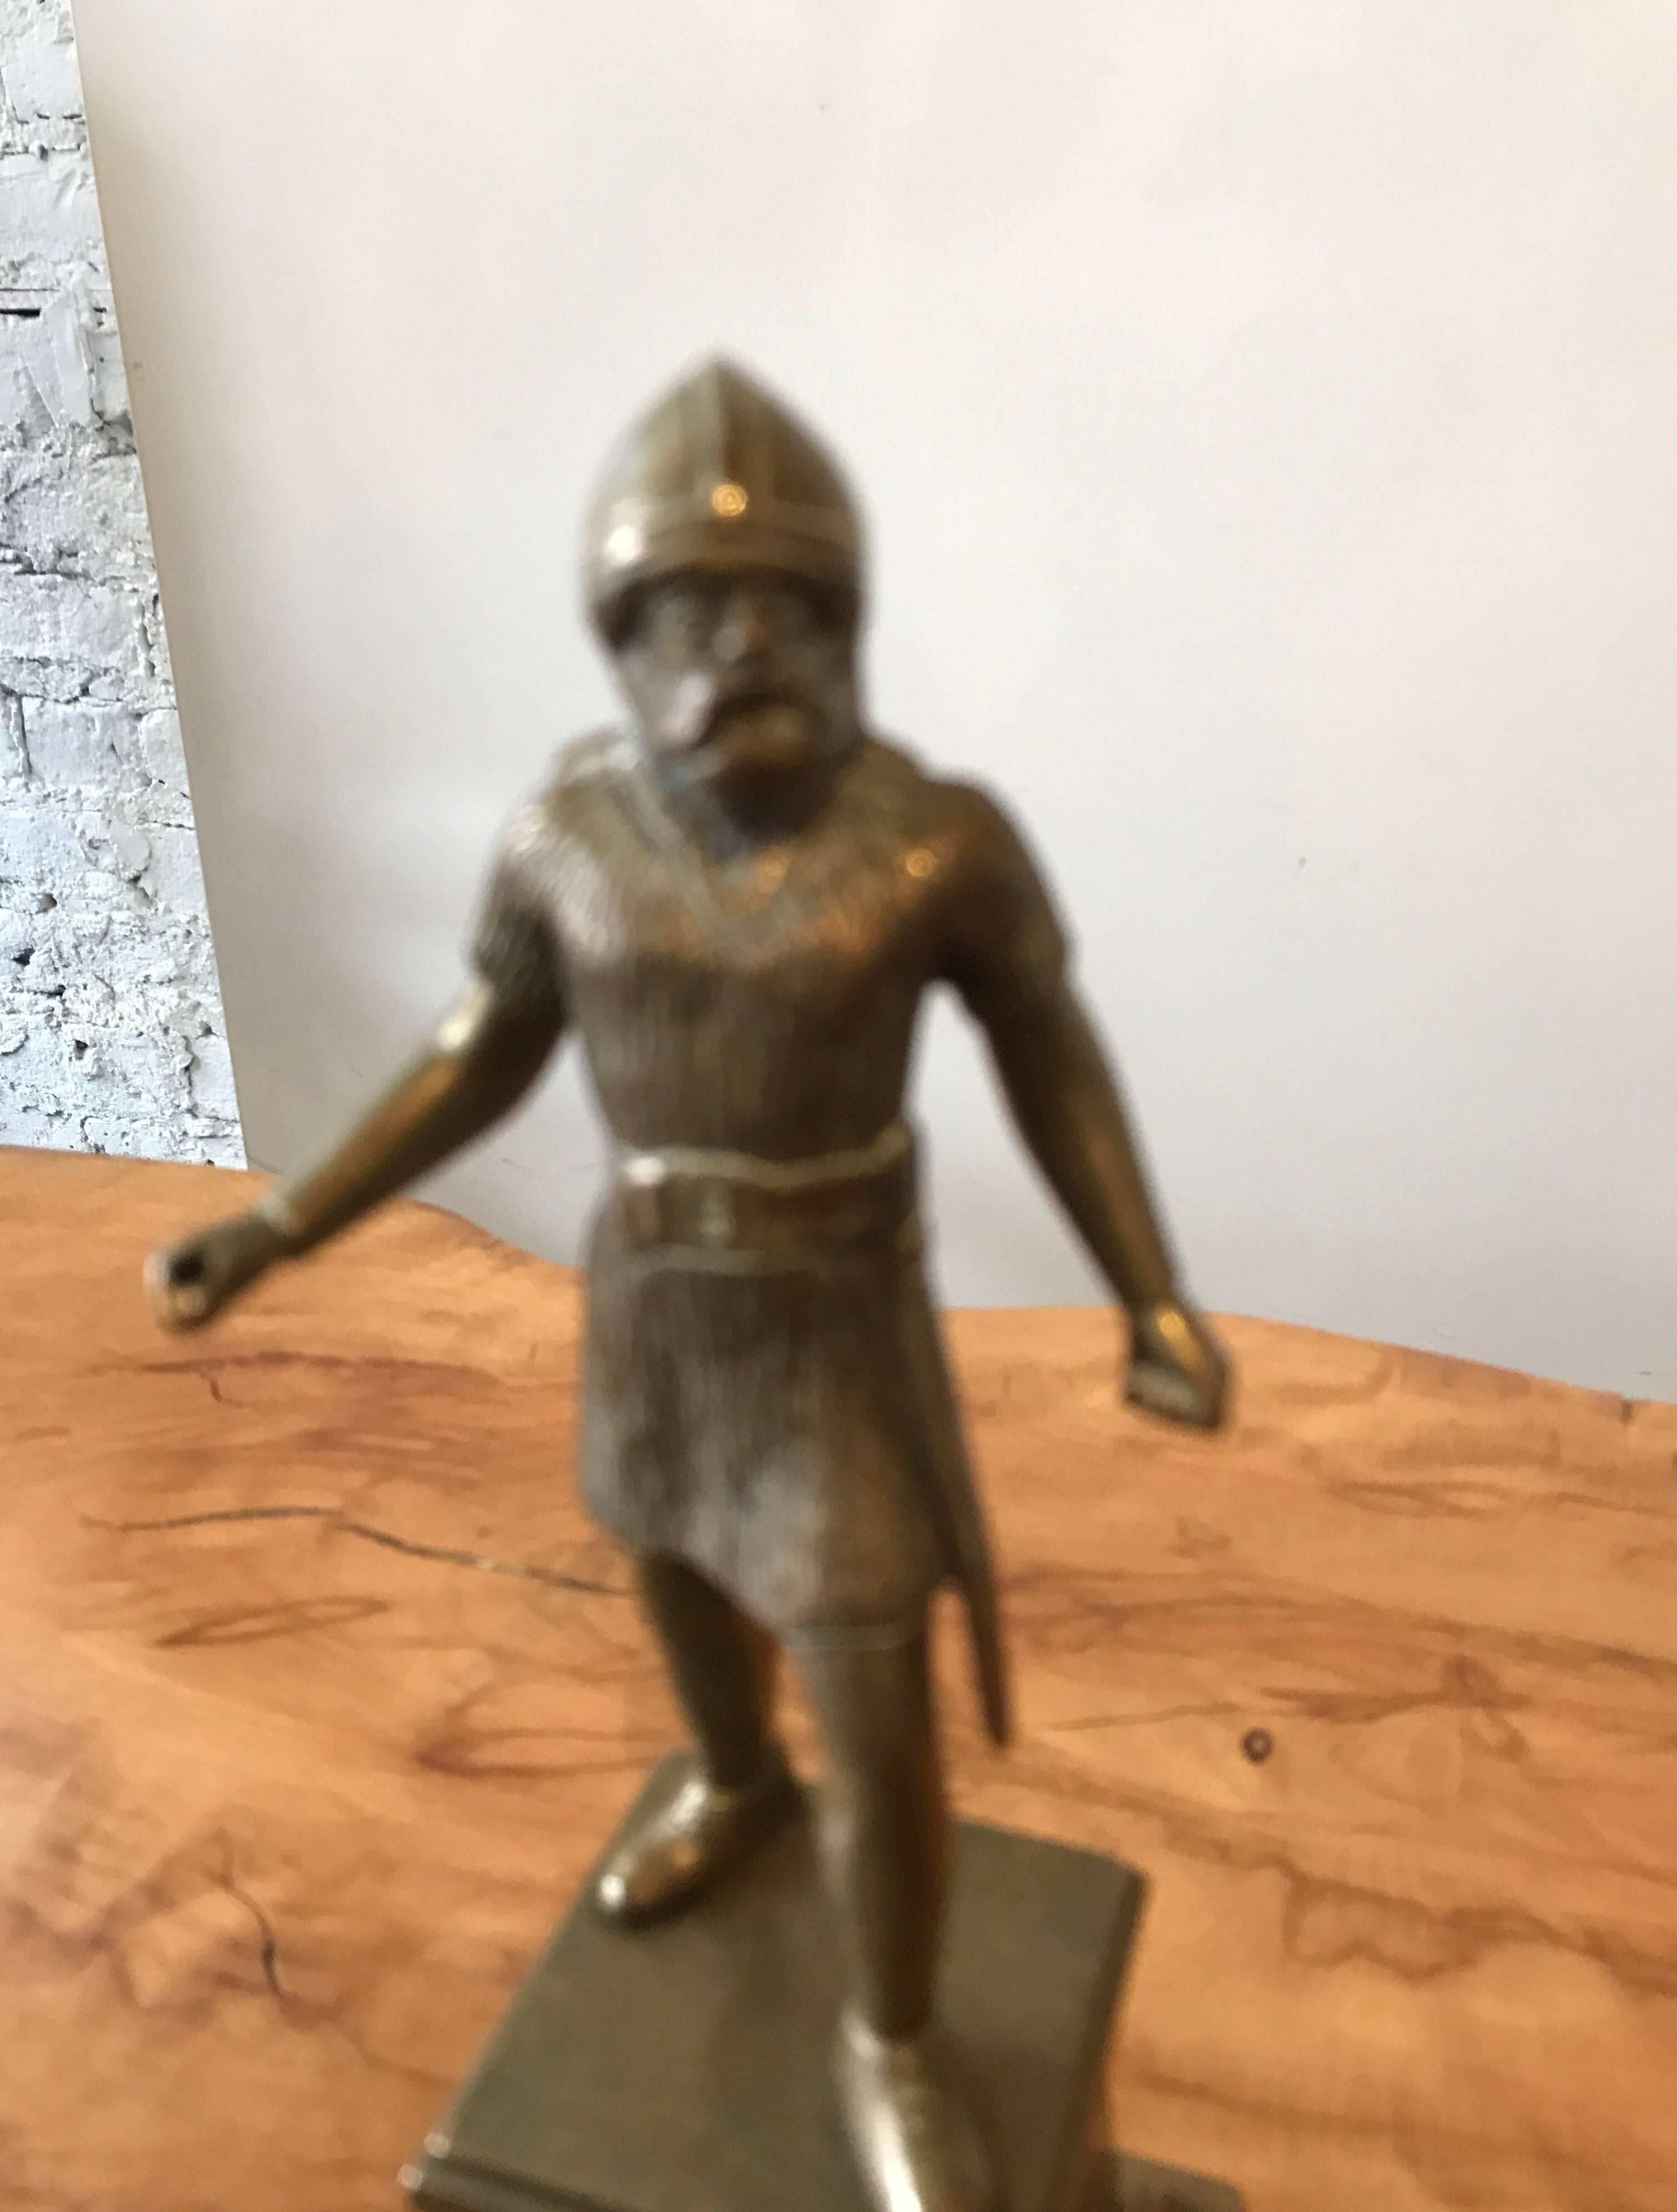 A 19th century brass figural sculpture of a fierce Viking warrior.
Enchanting decorative tabletop object. Fine desk top accessory.
Highest quality casting. Fine historic memorabilia.